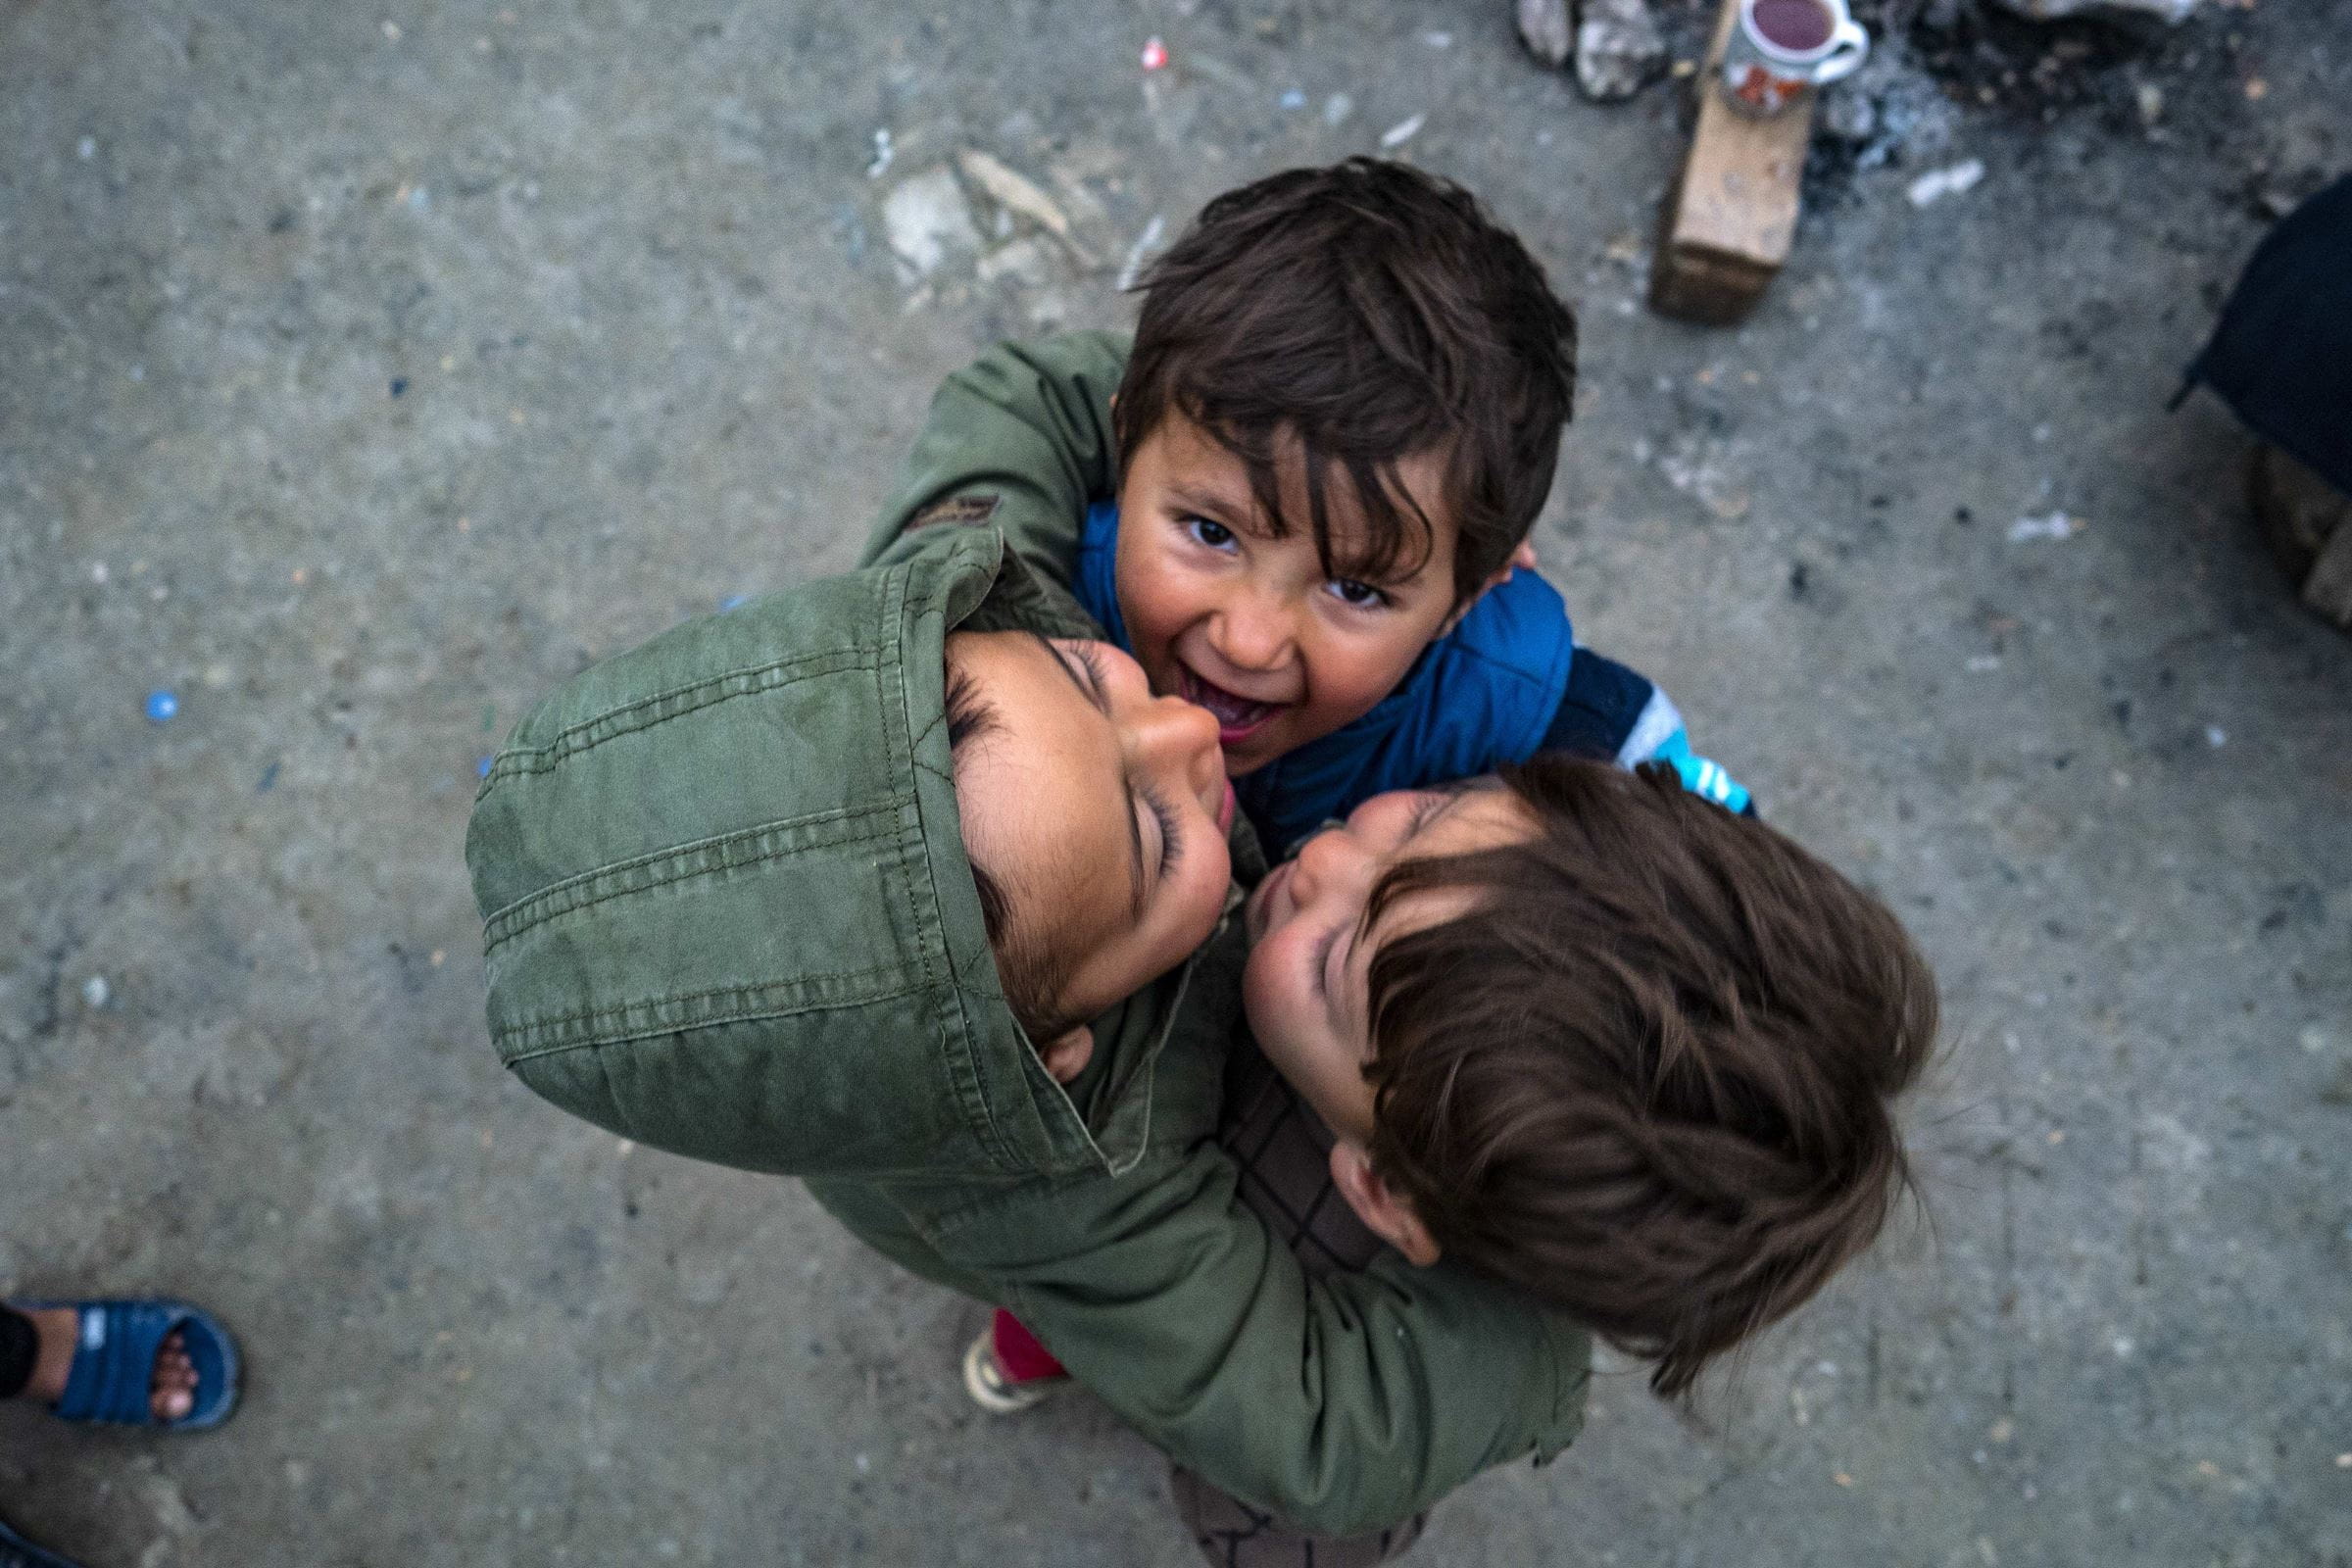 Kinder im Flüchlingscamp auf Lesbos umarmen sich (Quelle: Knut Bry)